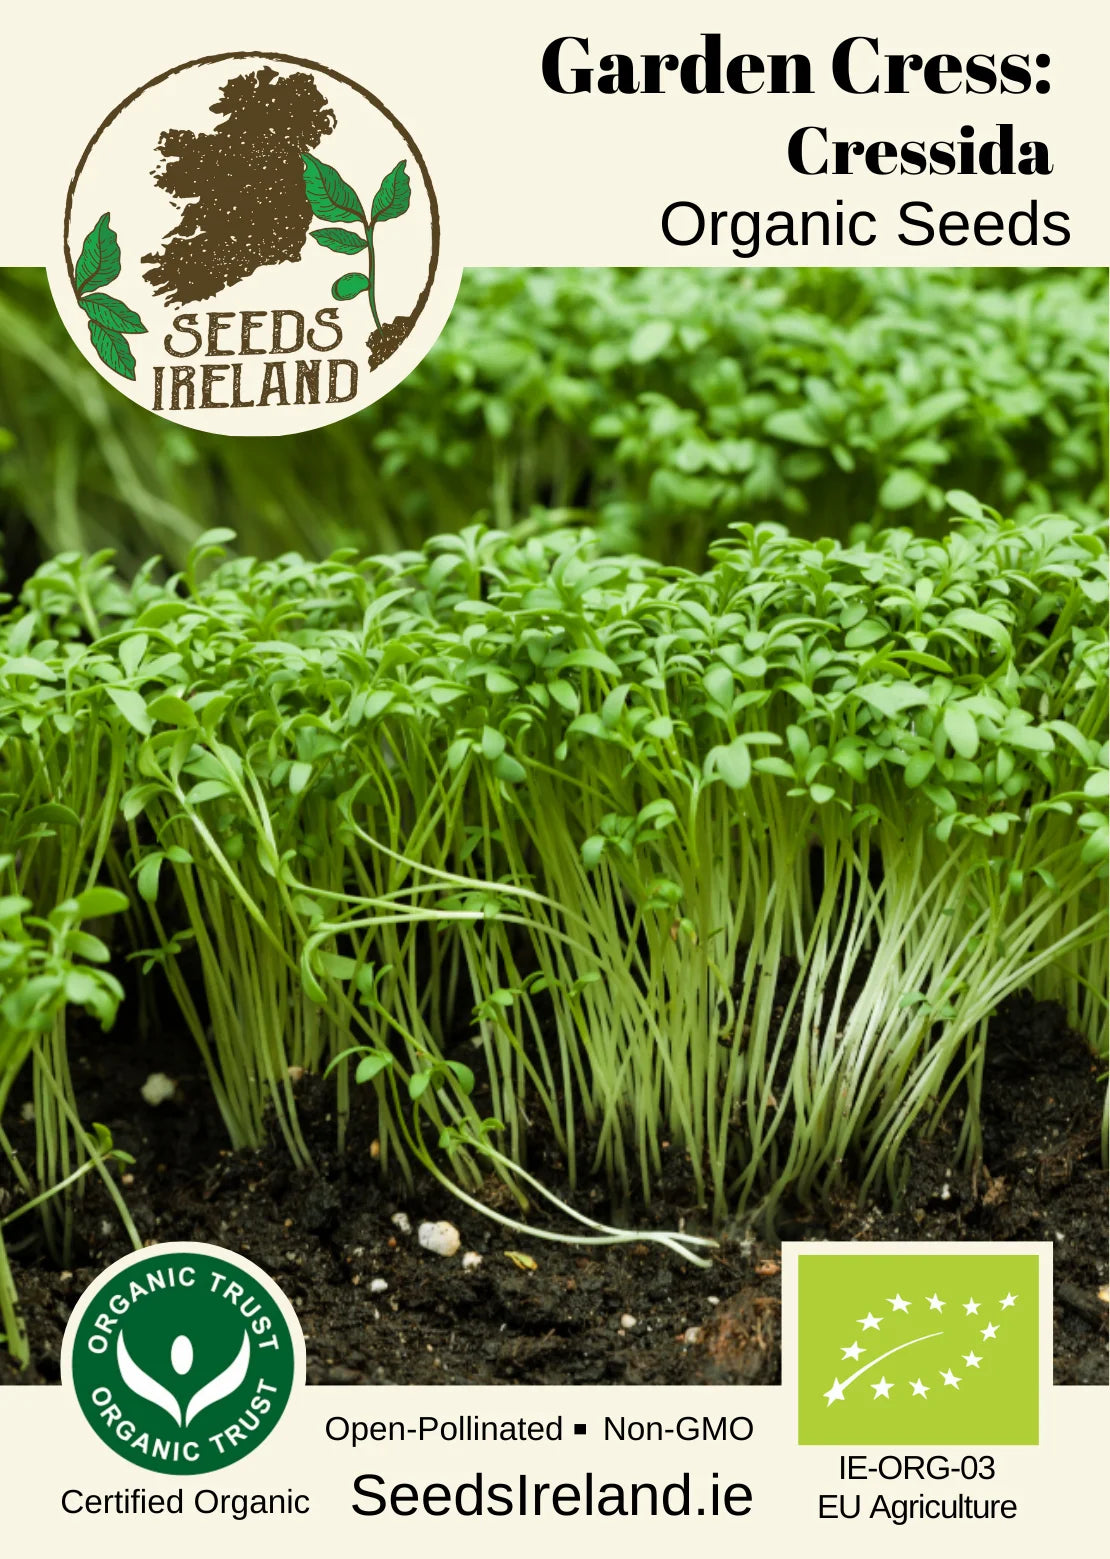 Garden Cress: Cressida Organic Seed